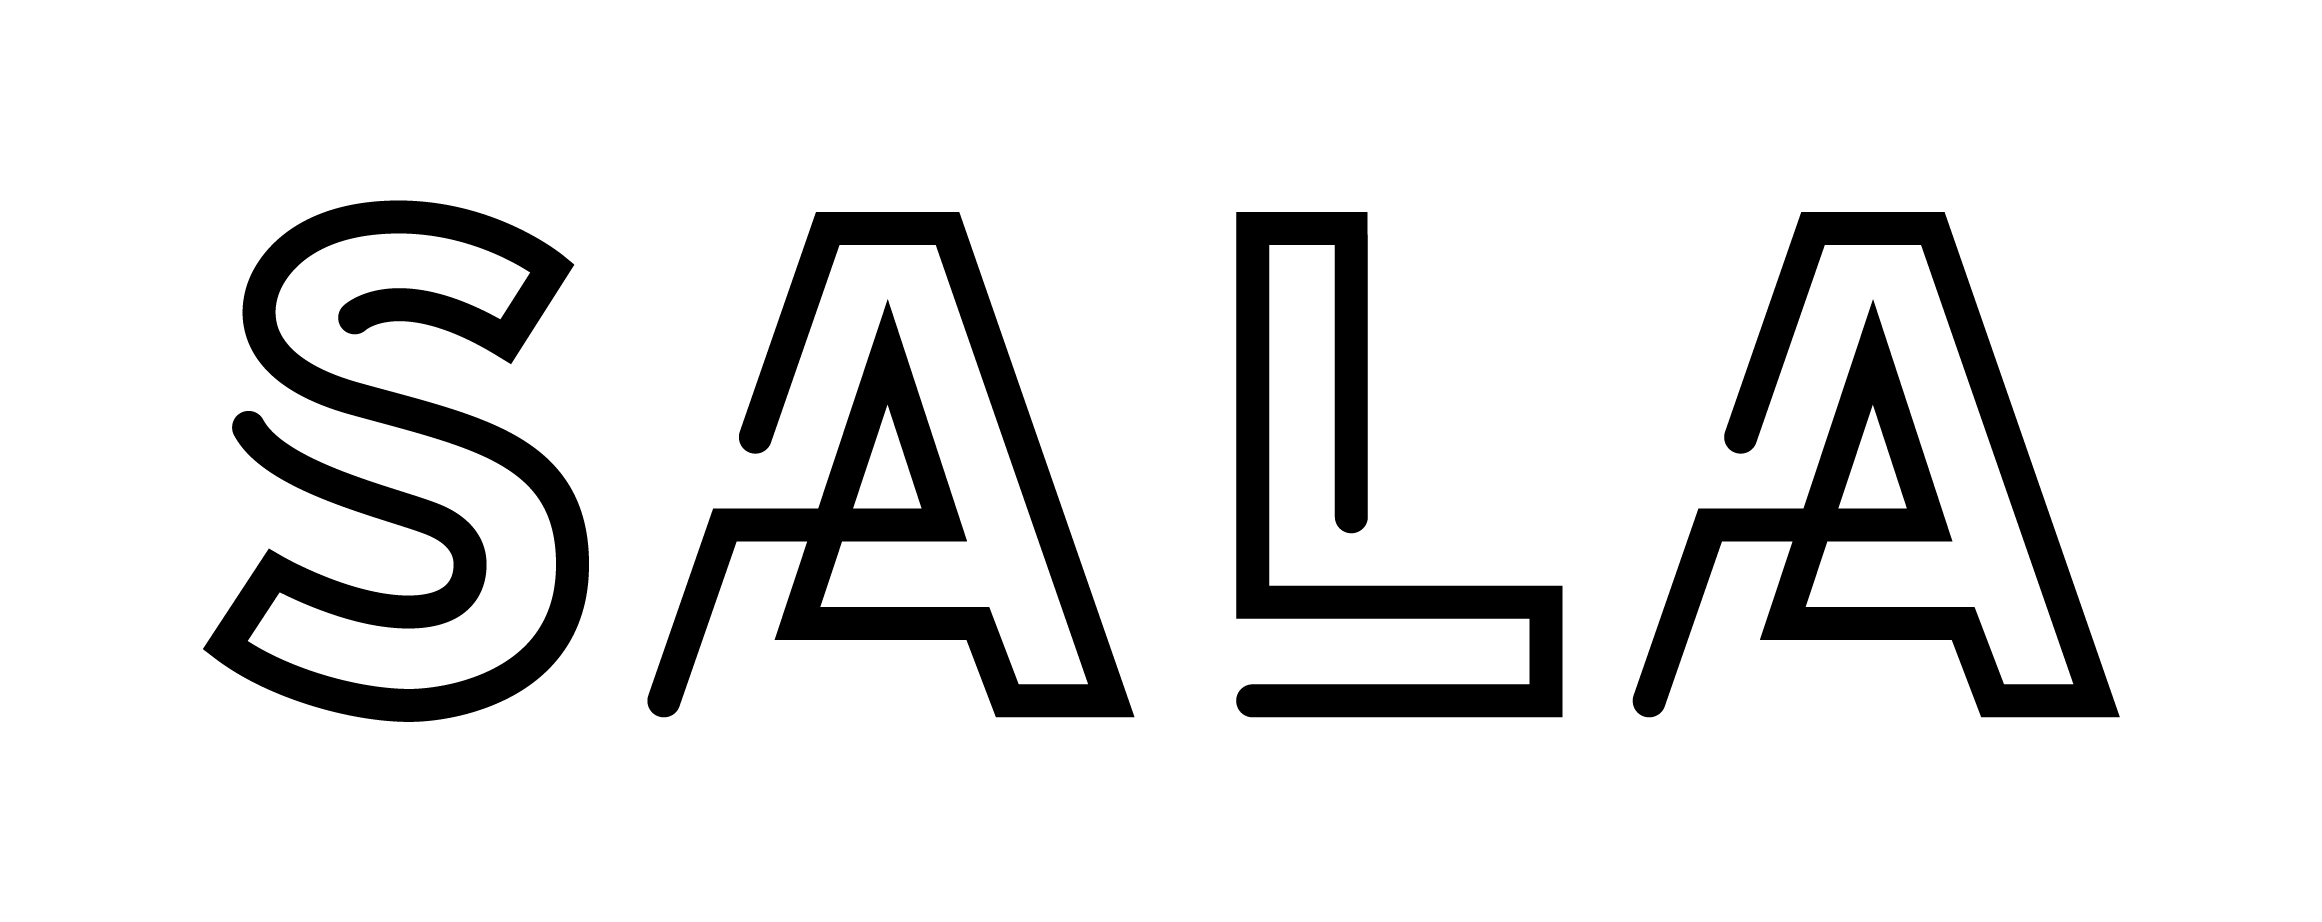 sala logo black and white